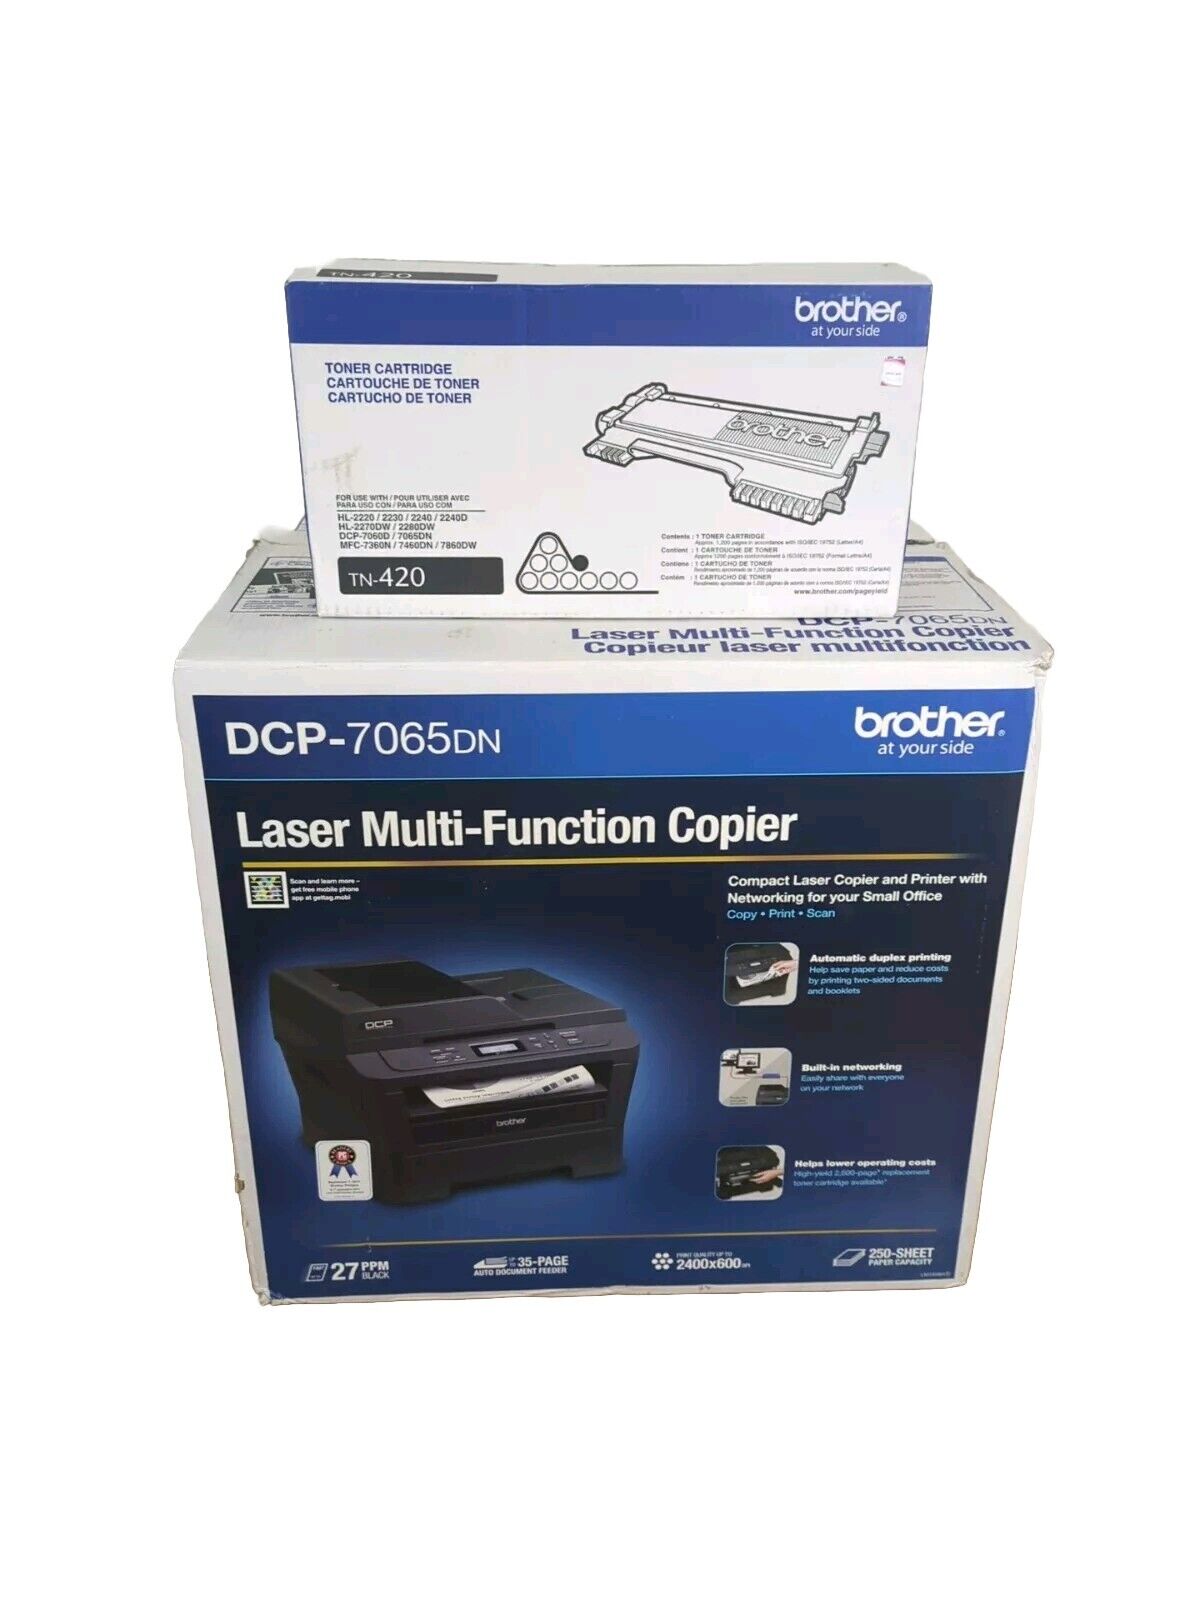 BROTHER DCP-7065DN Laser Copier Printer PRINT/SCAN/FAX DUPLEX - NEW OPEN BOX